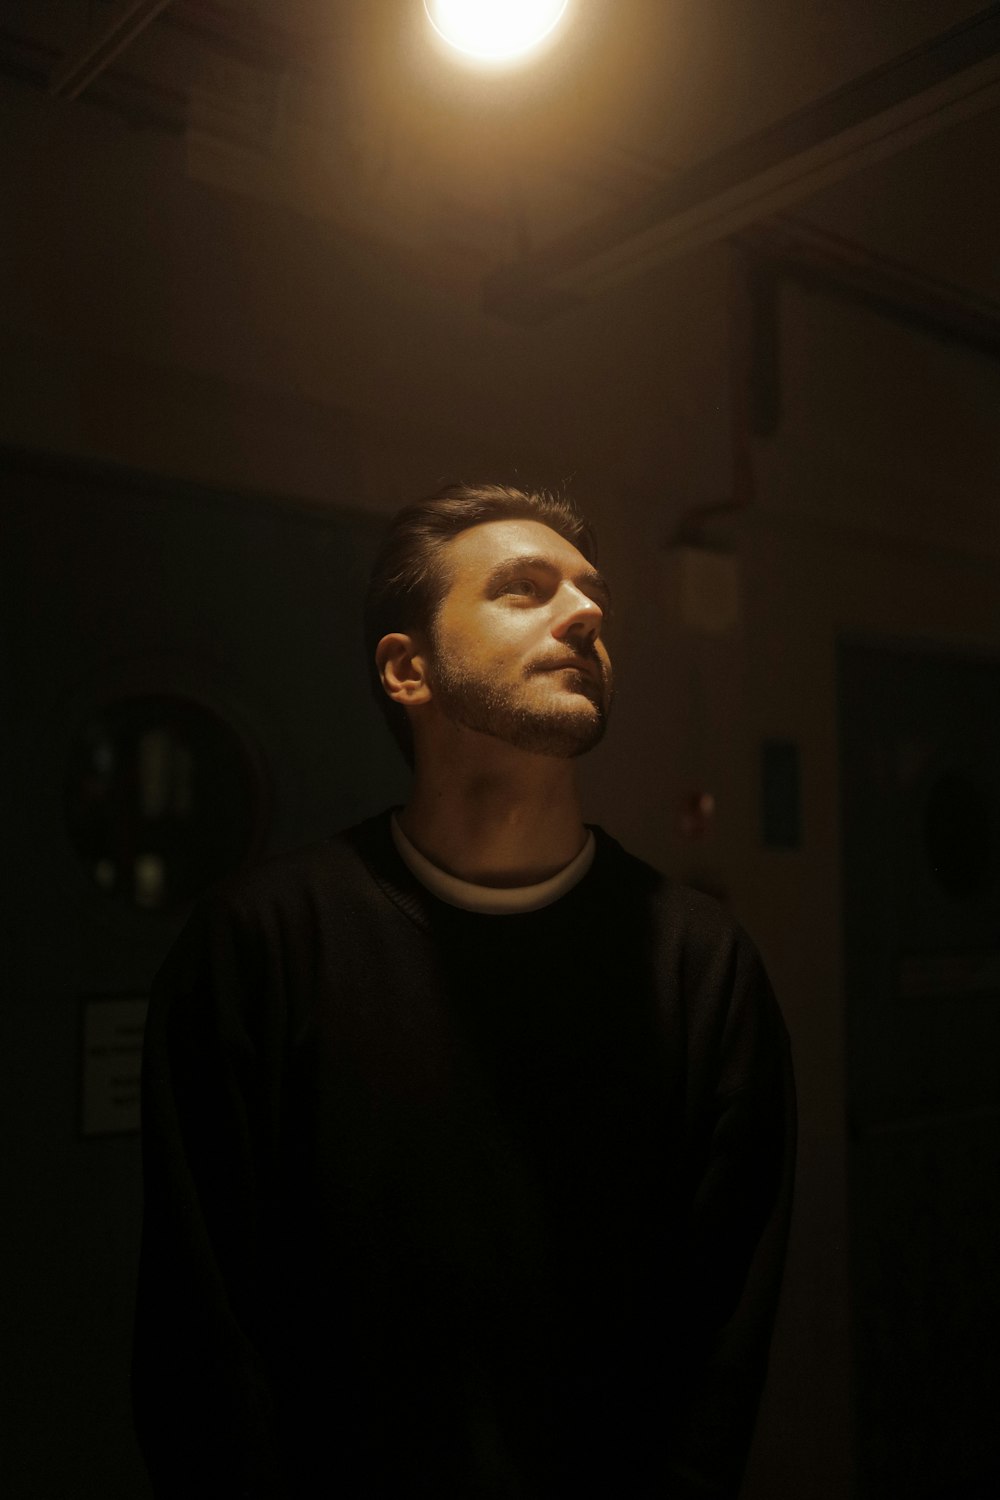 a man standing in a dark room under a light